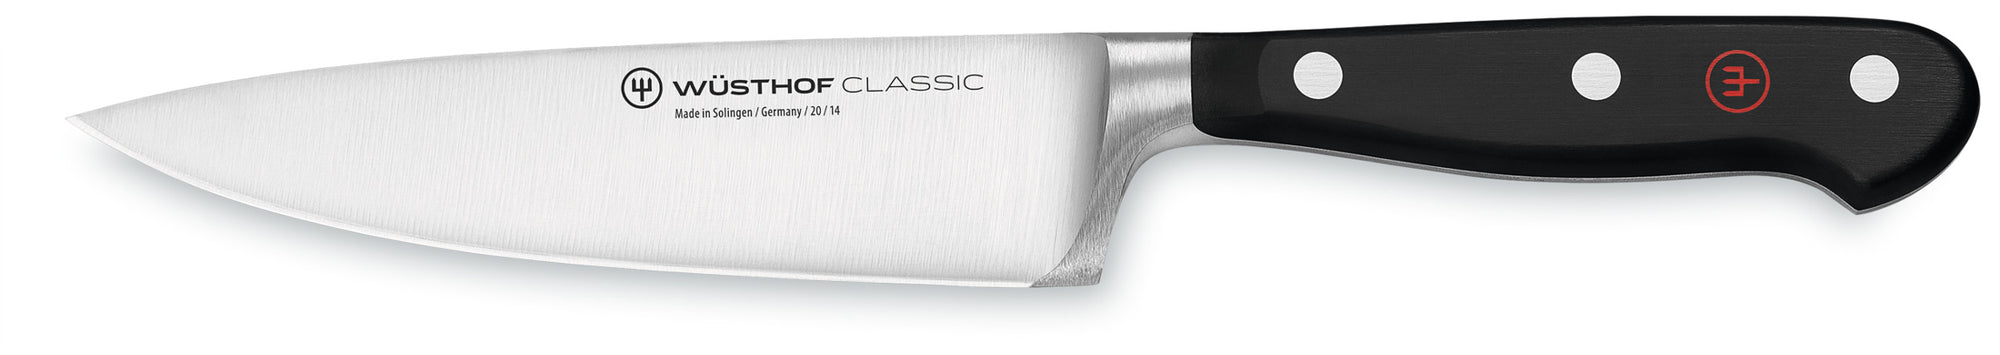 Wusthof Classic 14cm Chef Knife 4582-14 Canada